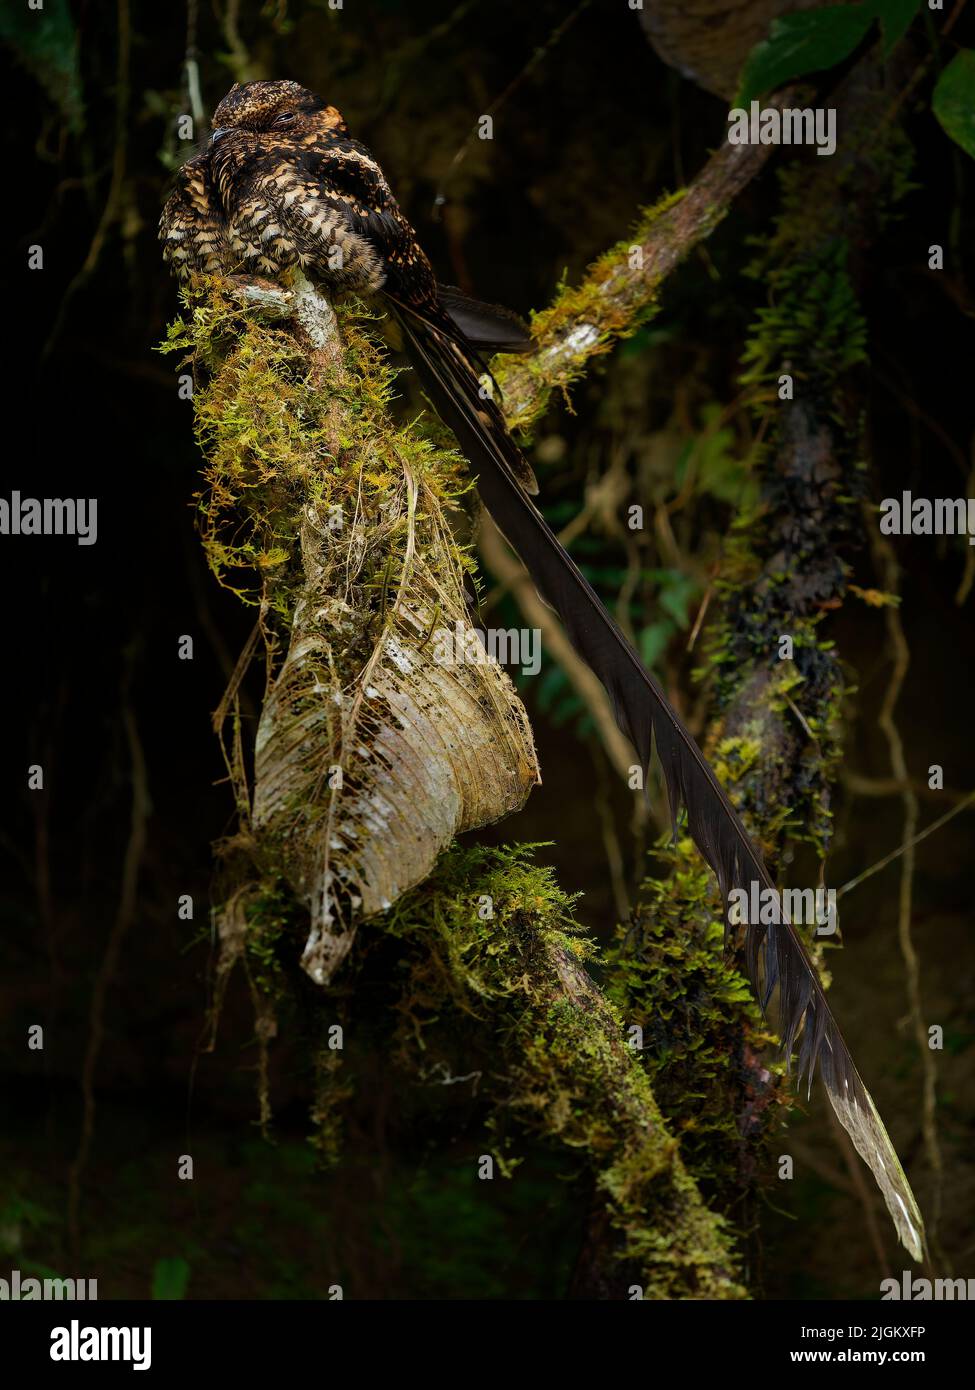 Lyre-tailed Nightjar - Uropsalis lyra brown bird with very long tail in Caprimulgidae, found in Argentina, Bolivia, Colombia, Ecuador, Peru and Venezu Stock Photo